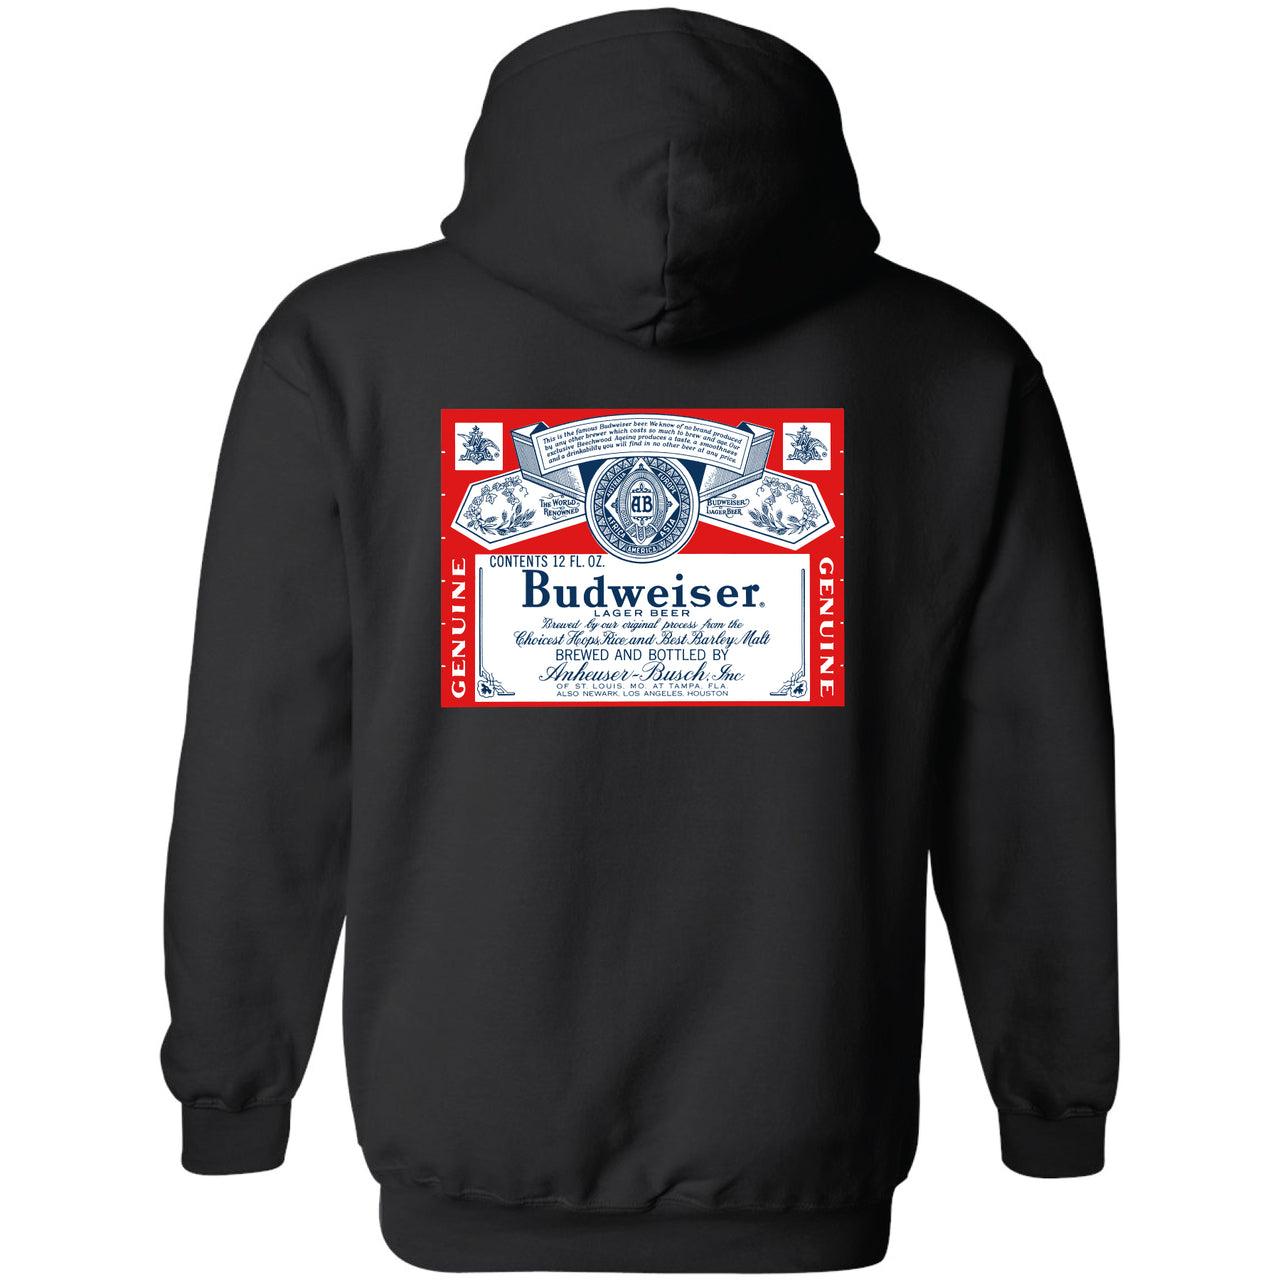 Budweiser - Vintage 1966 Label 2-Sided Hooded Sweatshirt